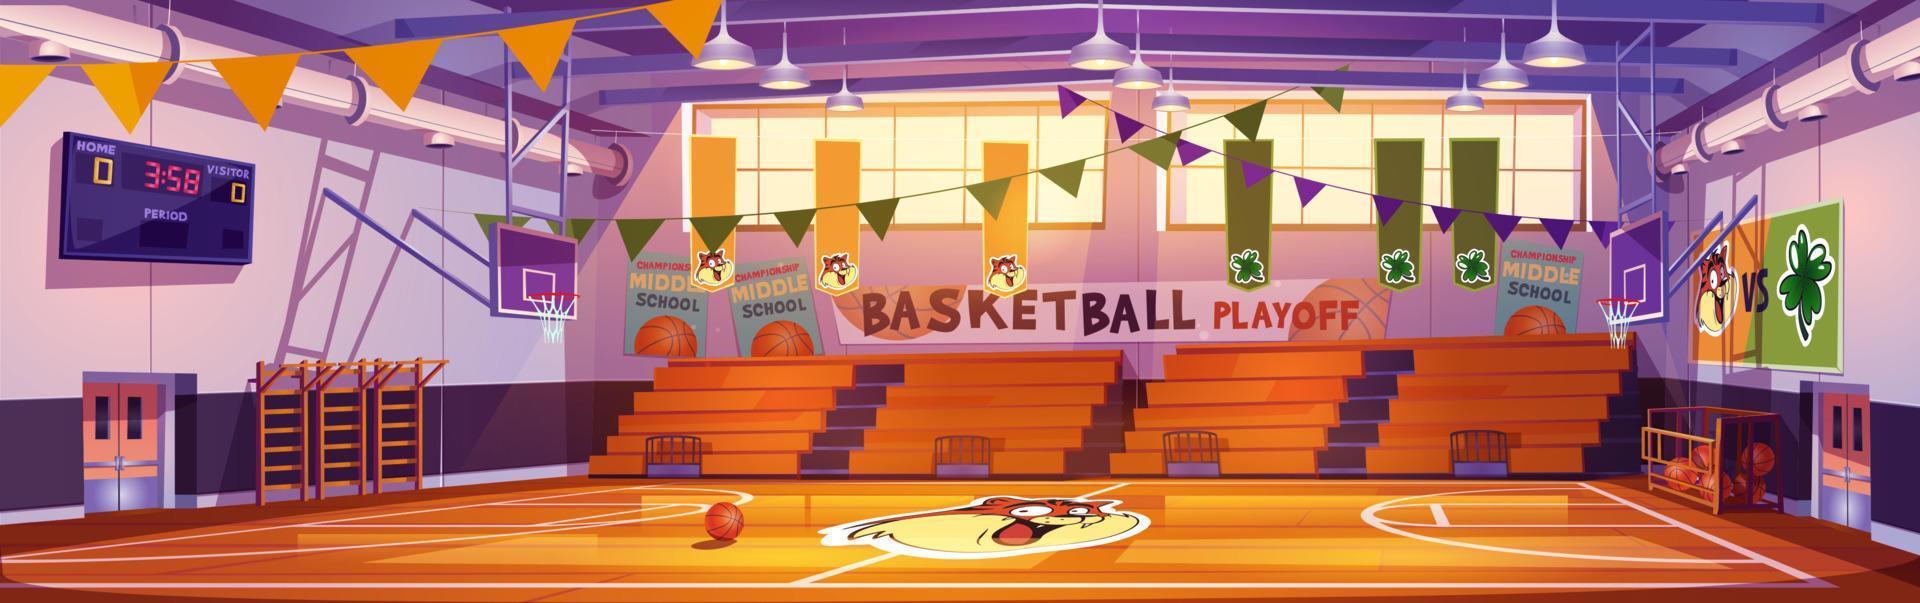 Basketball court interior, school sports arena vector